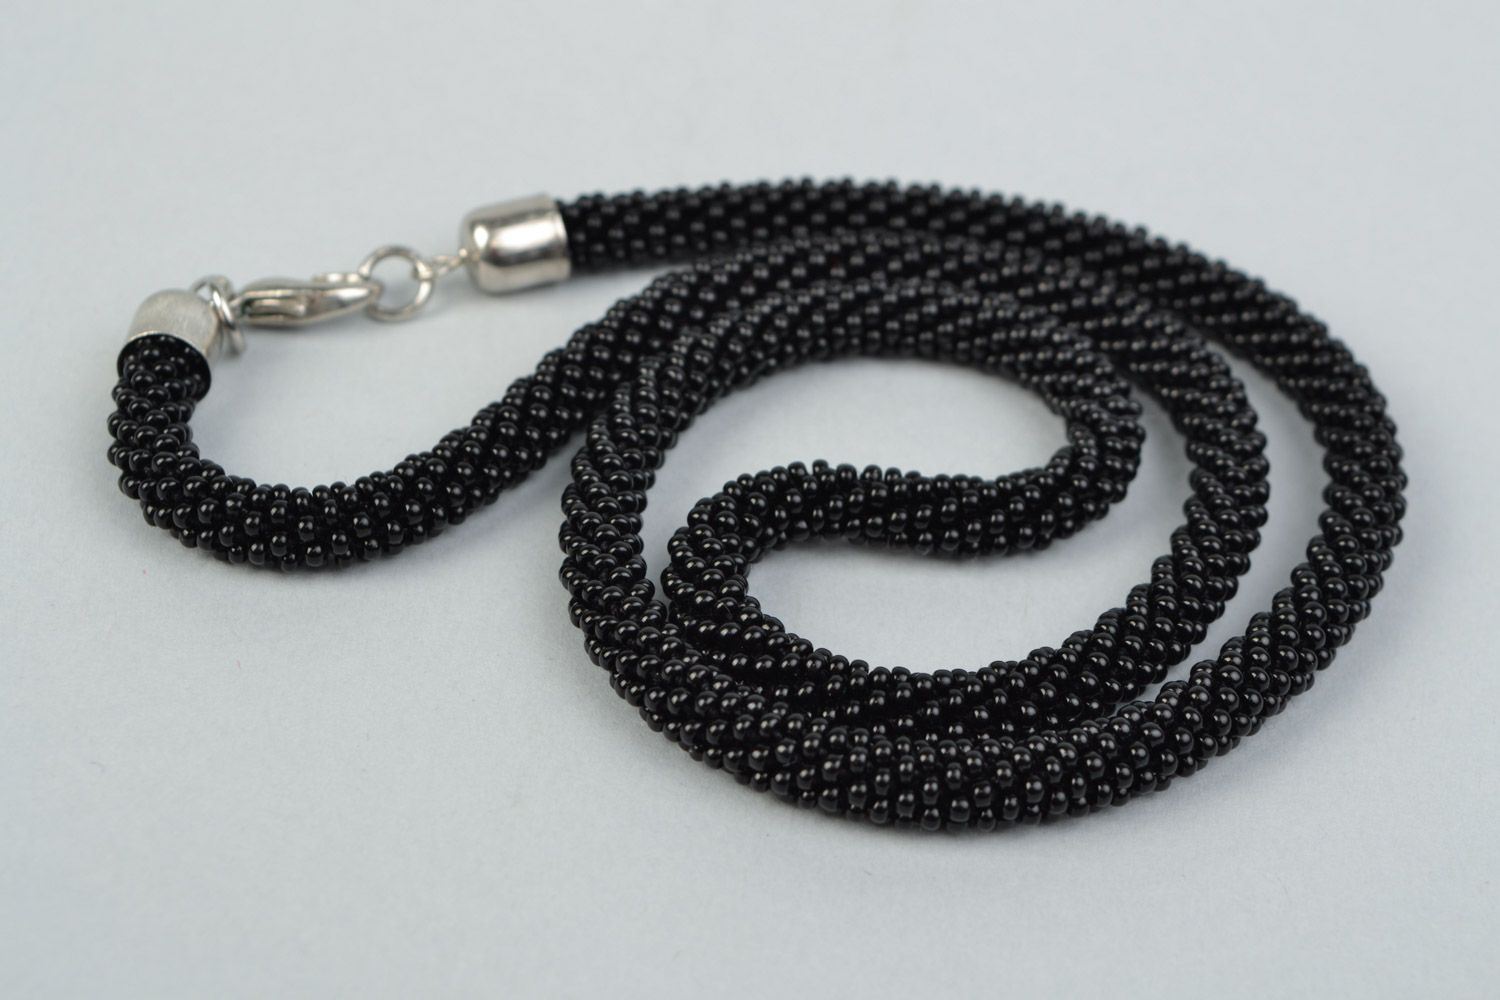 Handmade long elegant Czech beads necklace in black color for girls photo 1